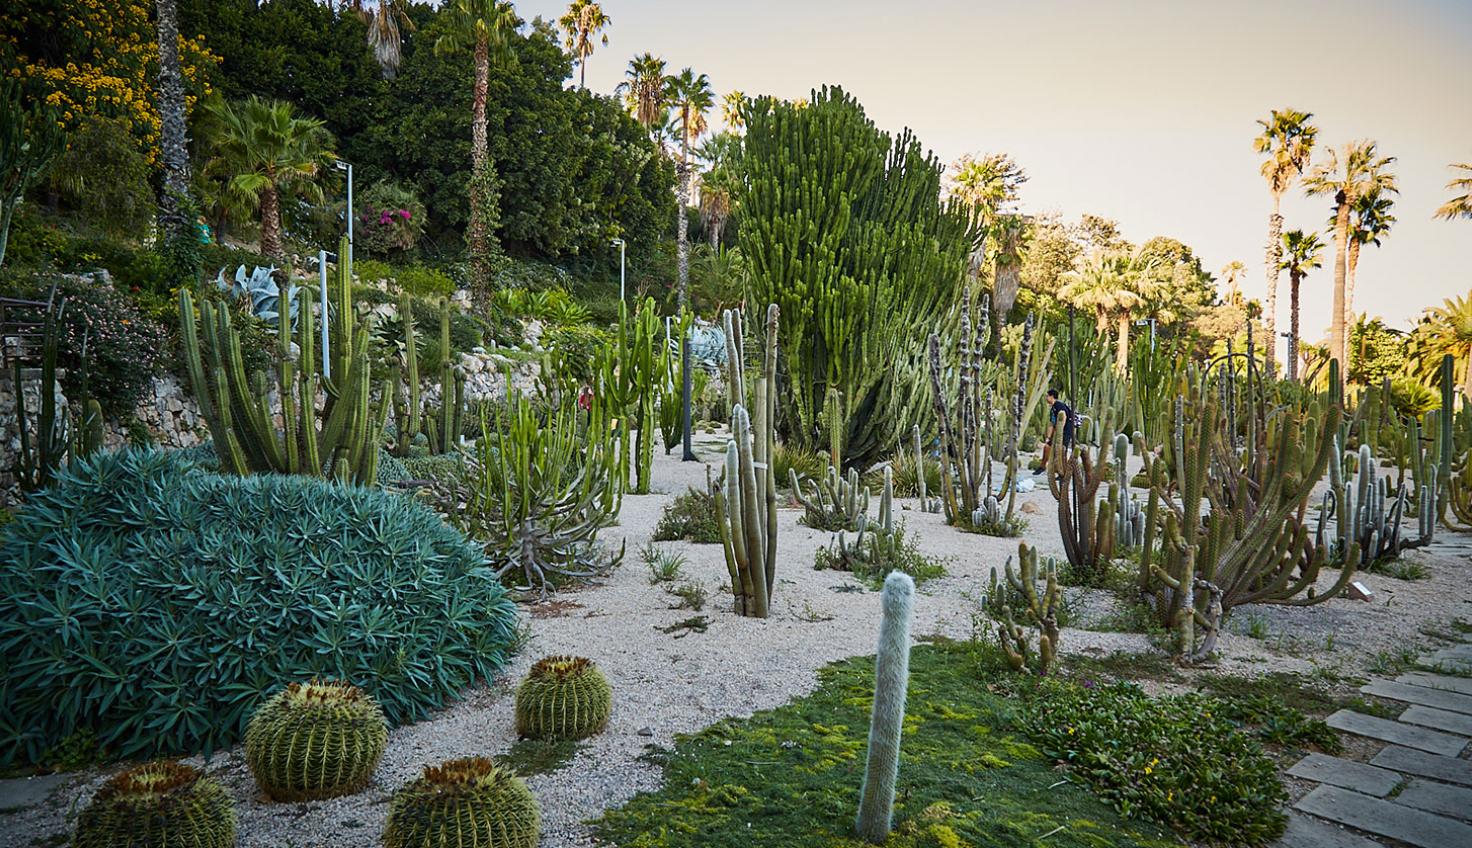 Jardines Mossèn Costa i Llobera - Los Mejores Parques y Jardines de Barcelona